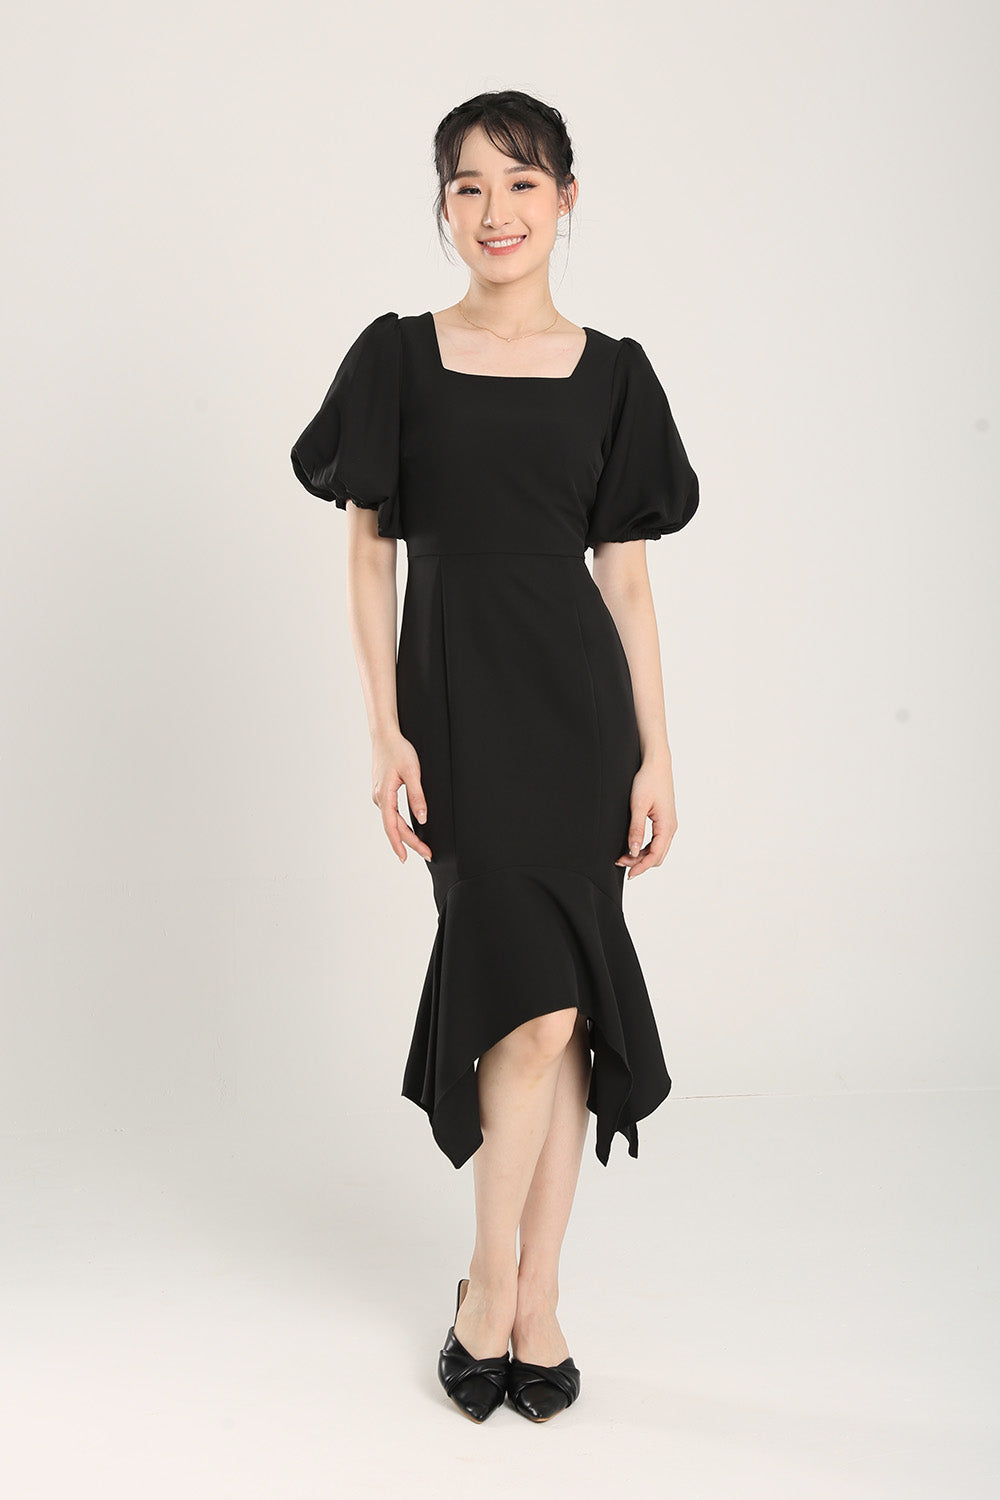 Margaux Mermaid Bodycon Dress in Black